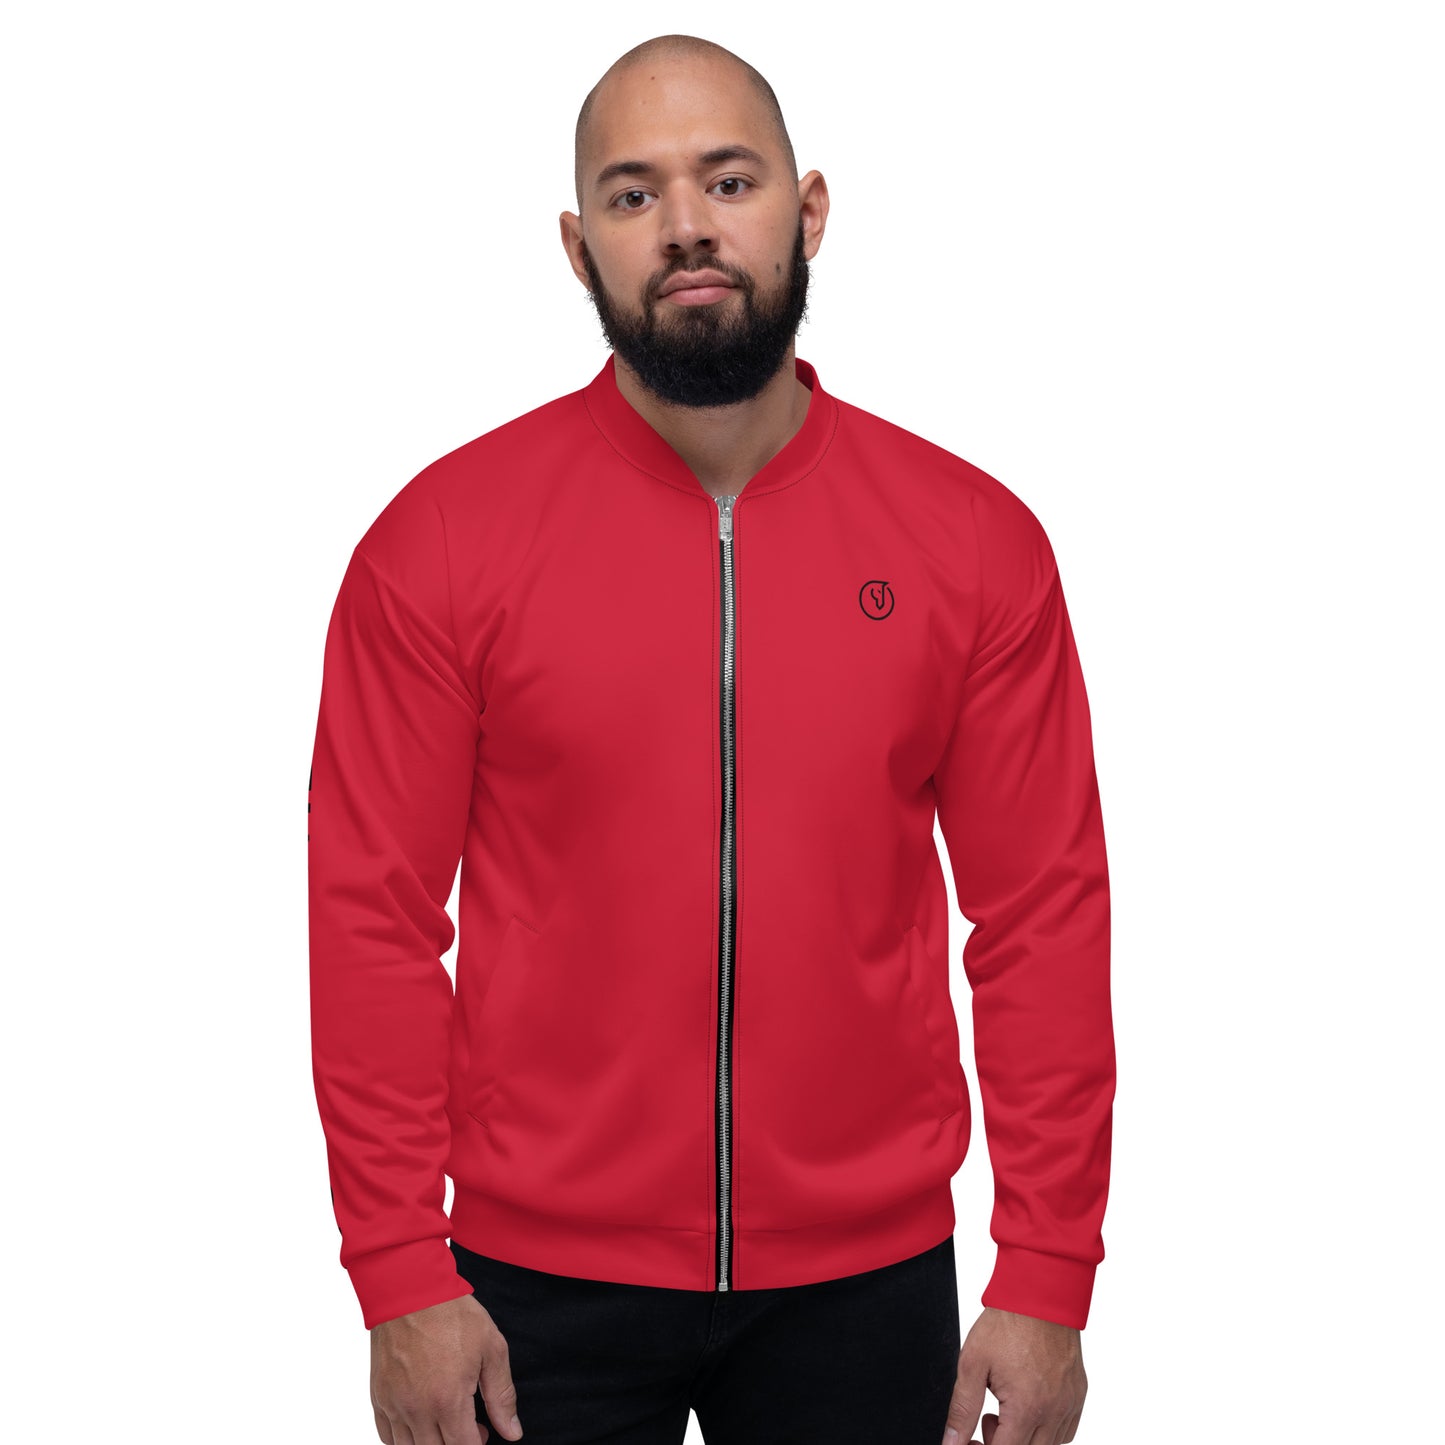 Humble Sportswear, men’s bomber jackets, red bomber jackets, men’s casual jackets, men’s workout jackets, men’s outerwear jackets